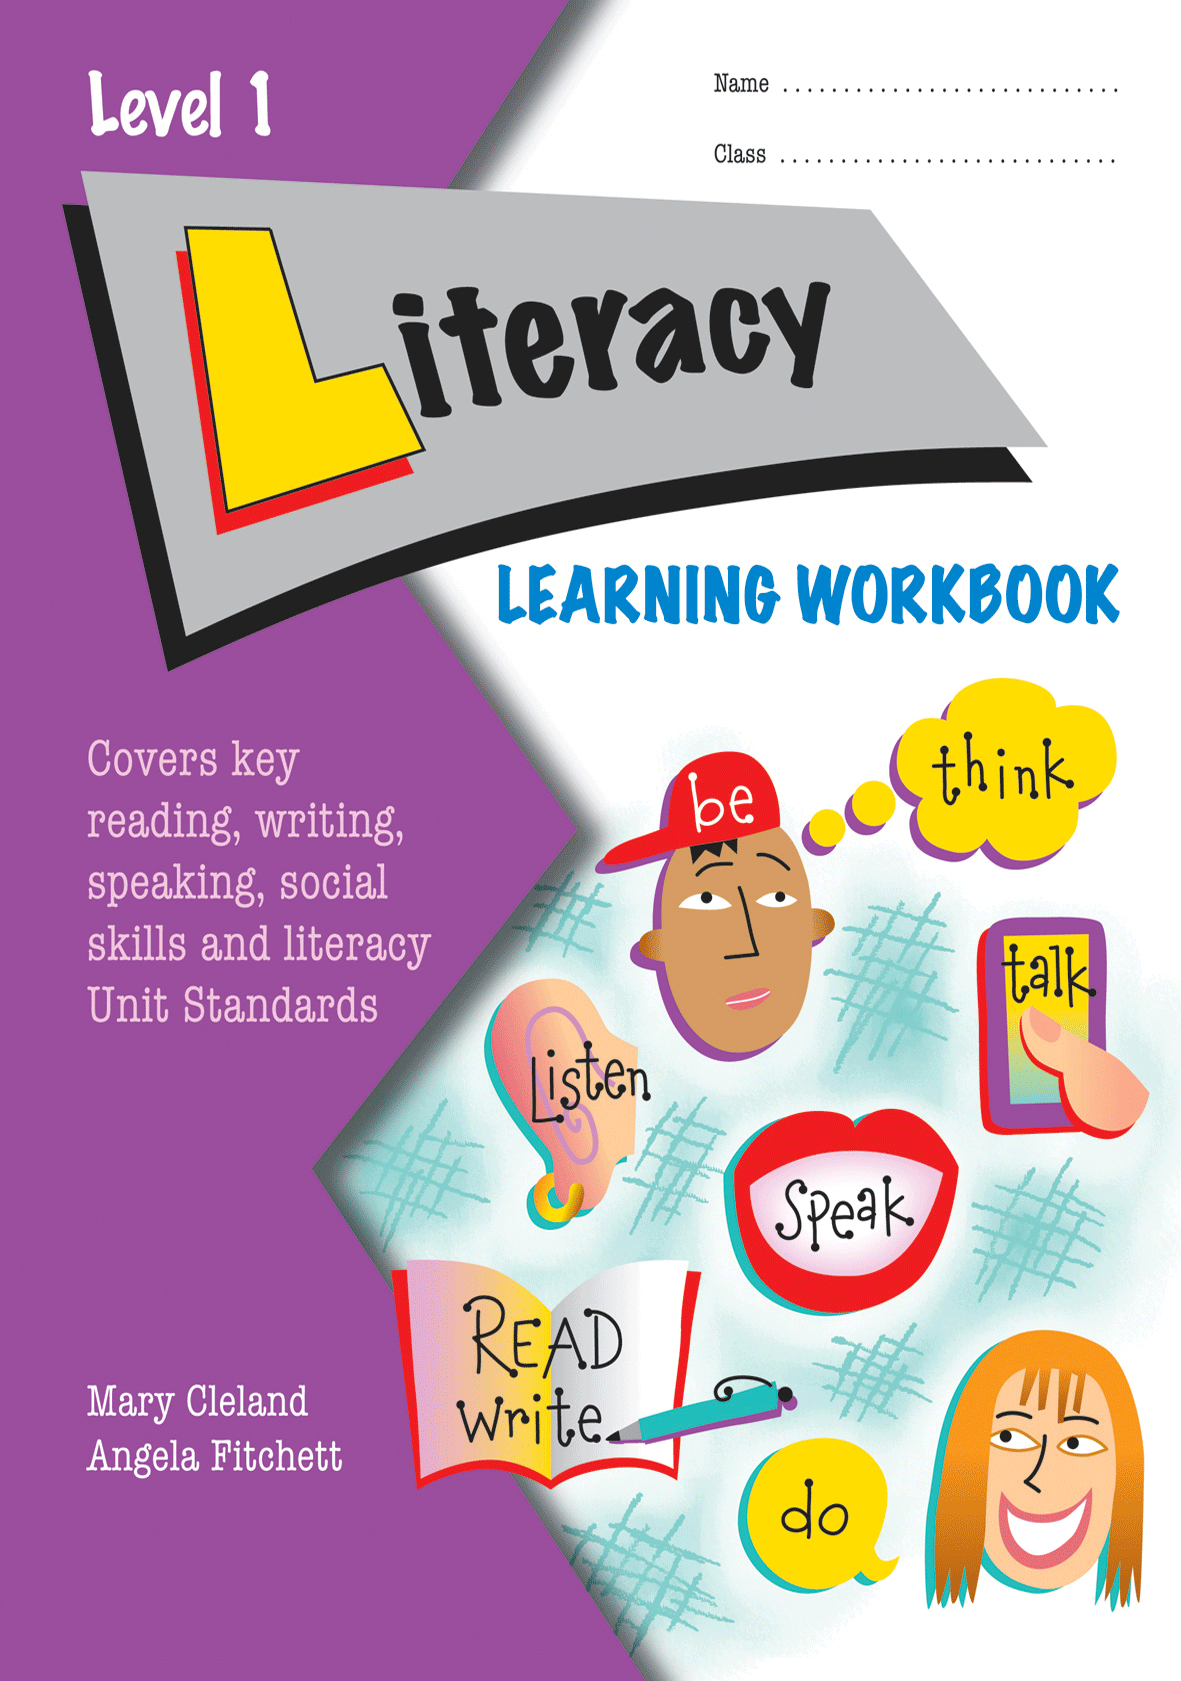 Level 1 Literacy Learning Workbook